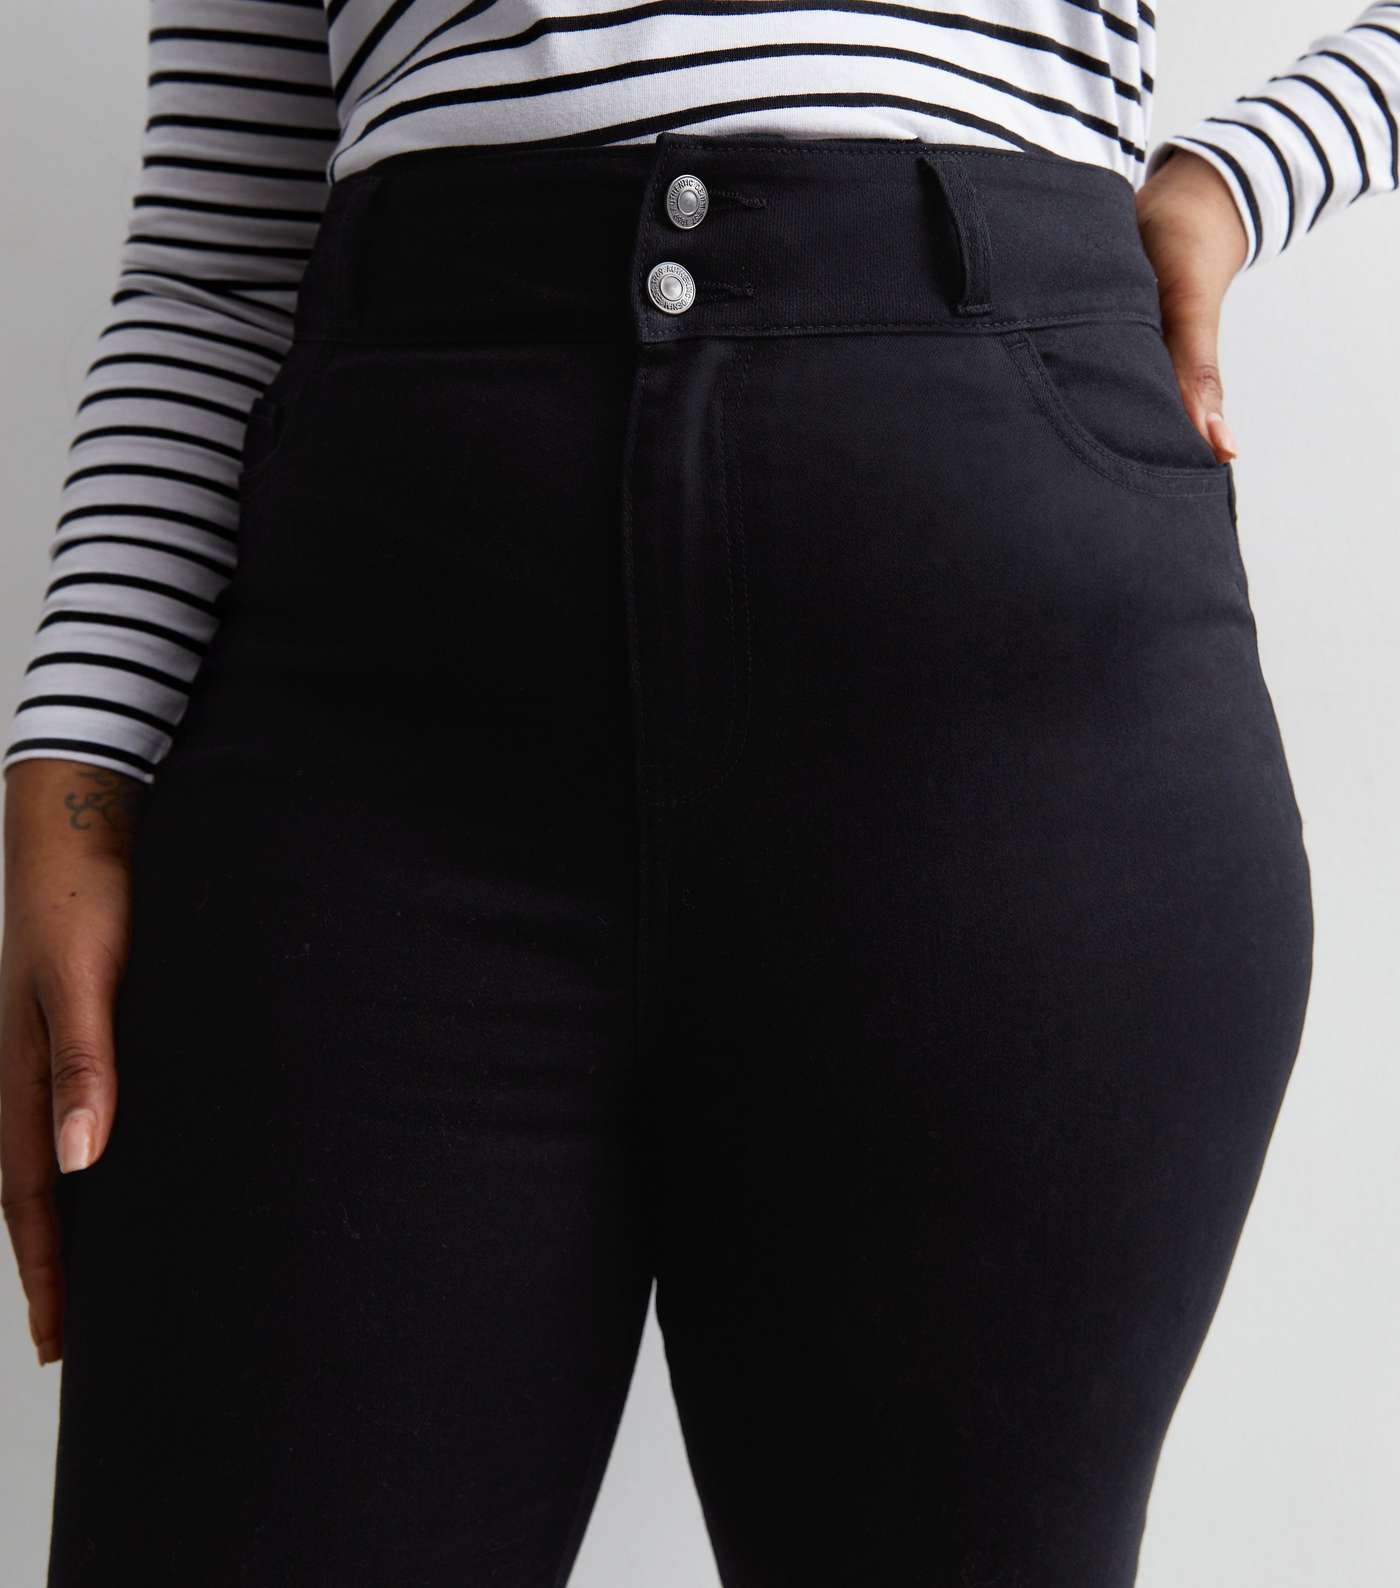 Curves Black Lift & Shape High Waist Yazmin Skinny Jeans Image 2